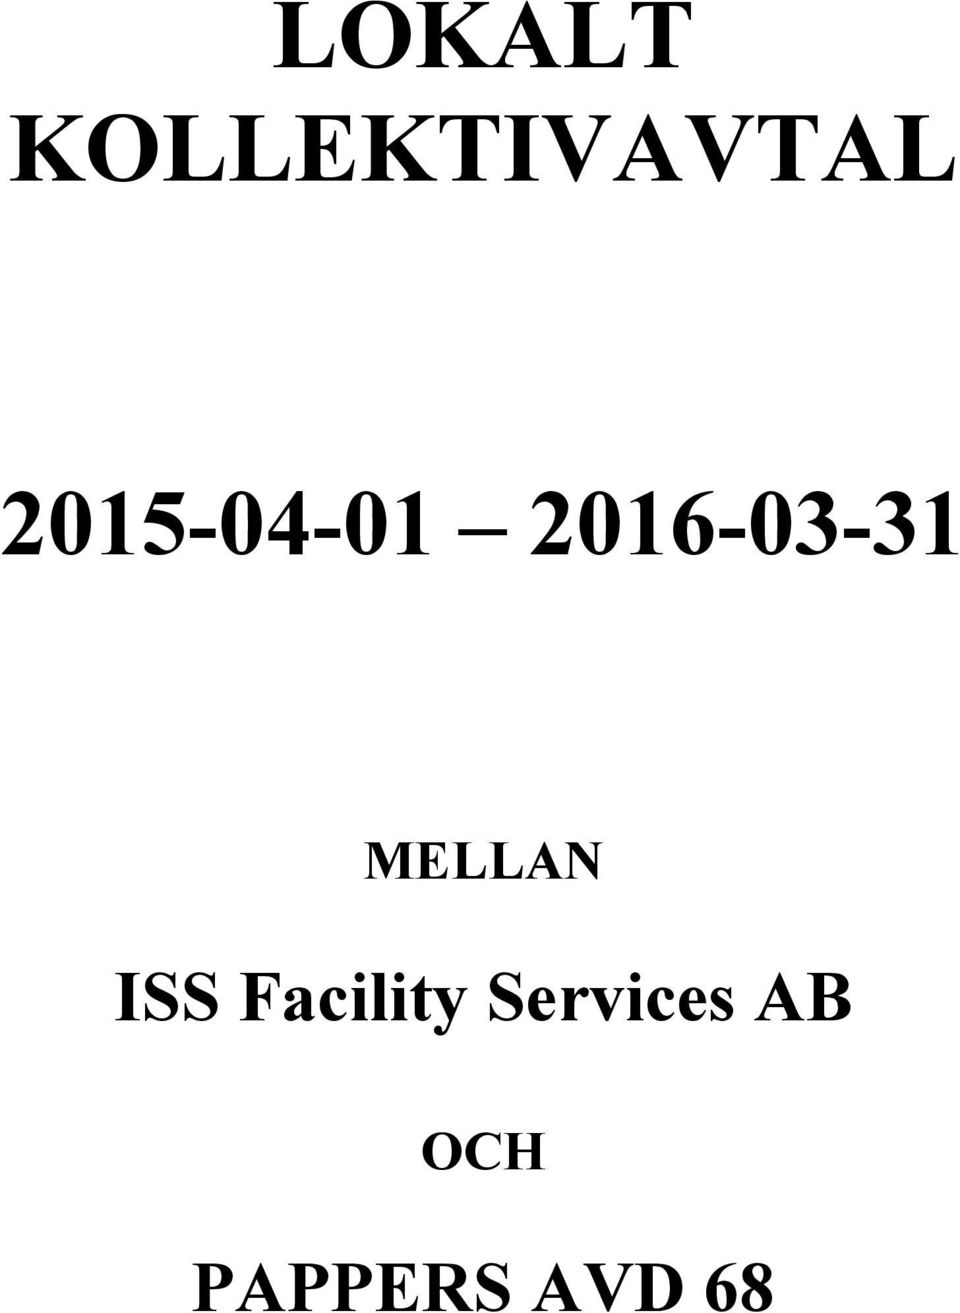 MELLAN ISS Facility